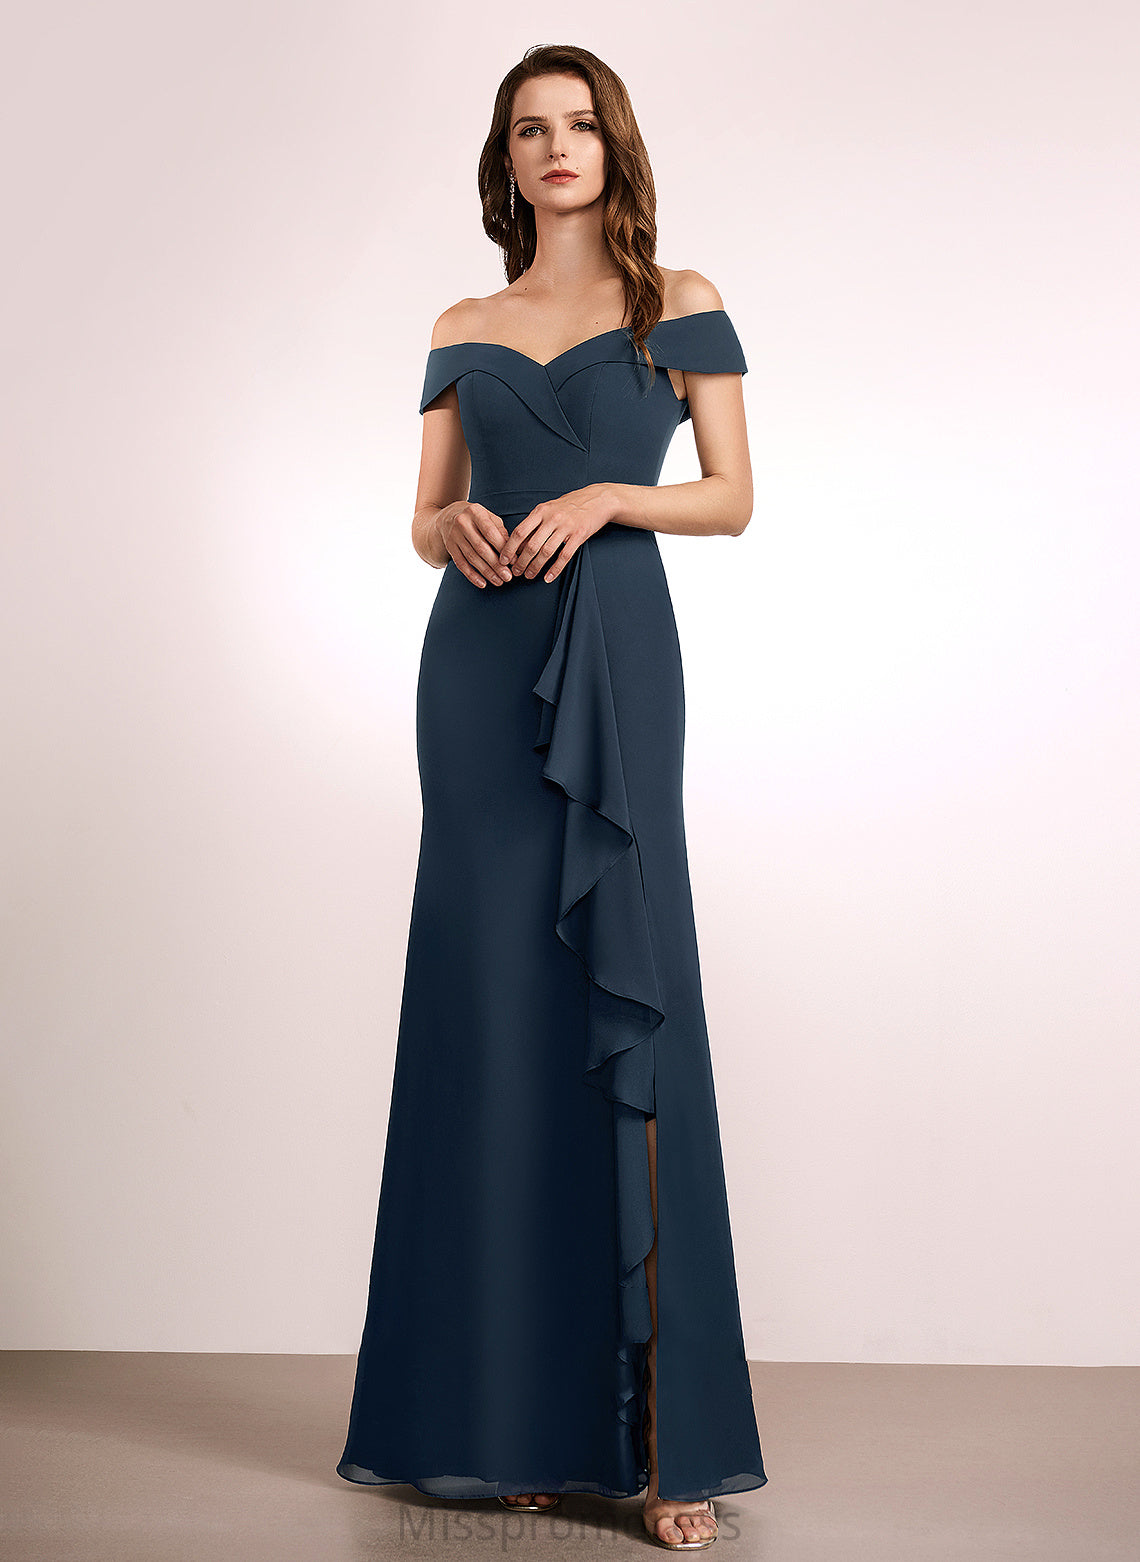 A-Line Neckline Length Ruffle Fabric Off-the-Shoulder Embellishment Floor-Length Silhouette Gretchen Floor Length Spaghetti Staps Bridesmaid Dresses